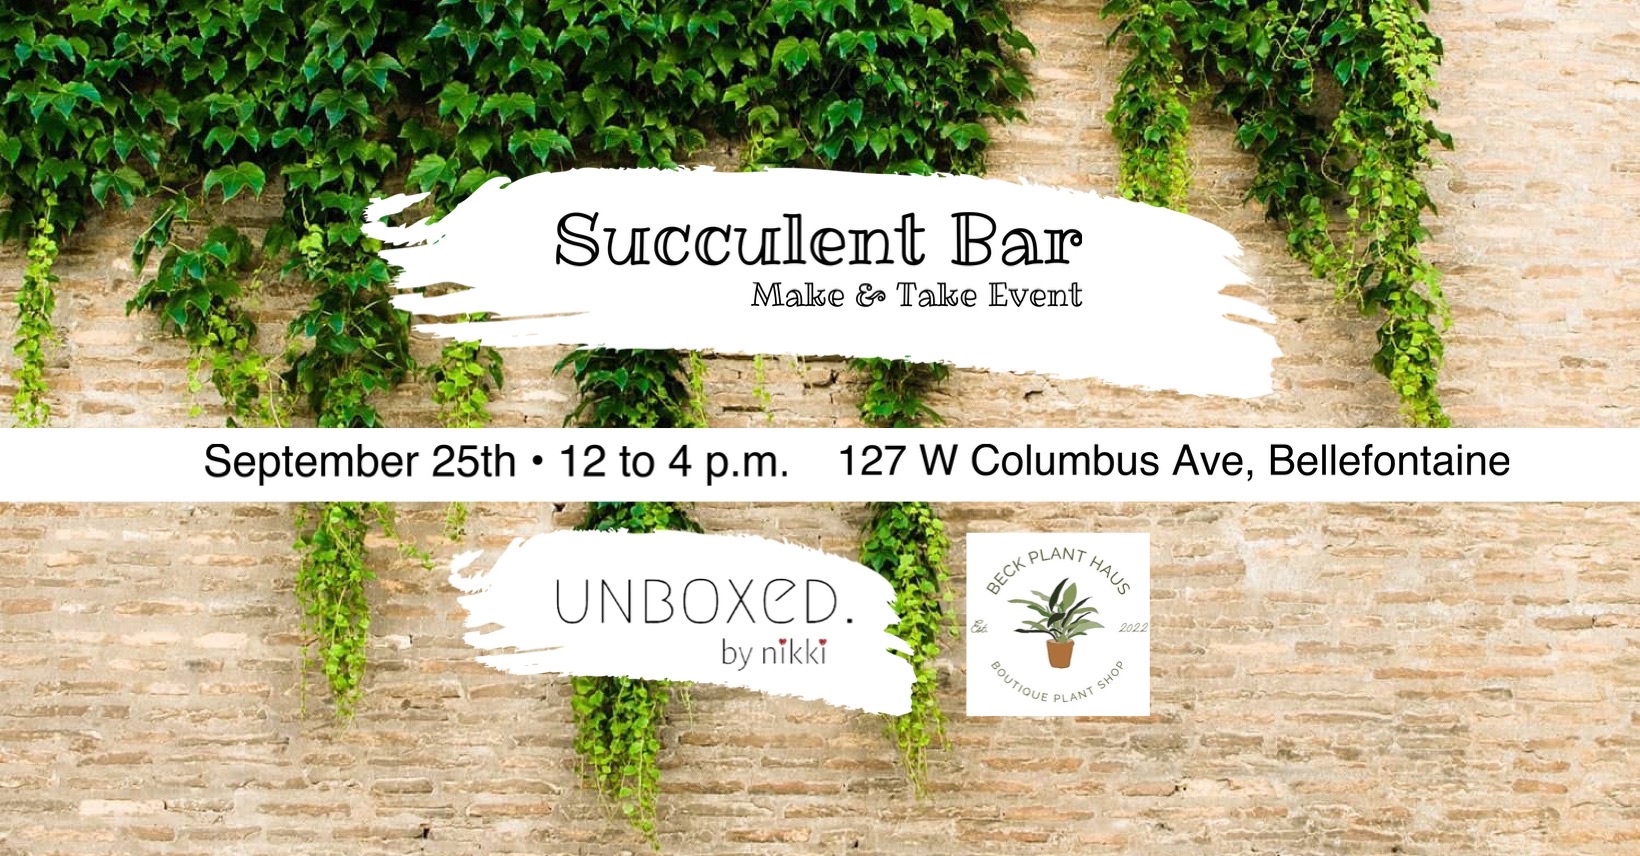 Succulent Bar: Make & Take Event